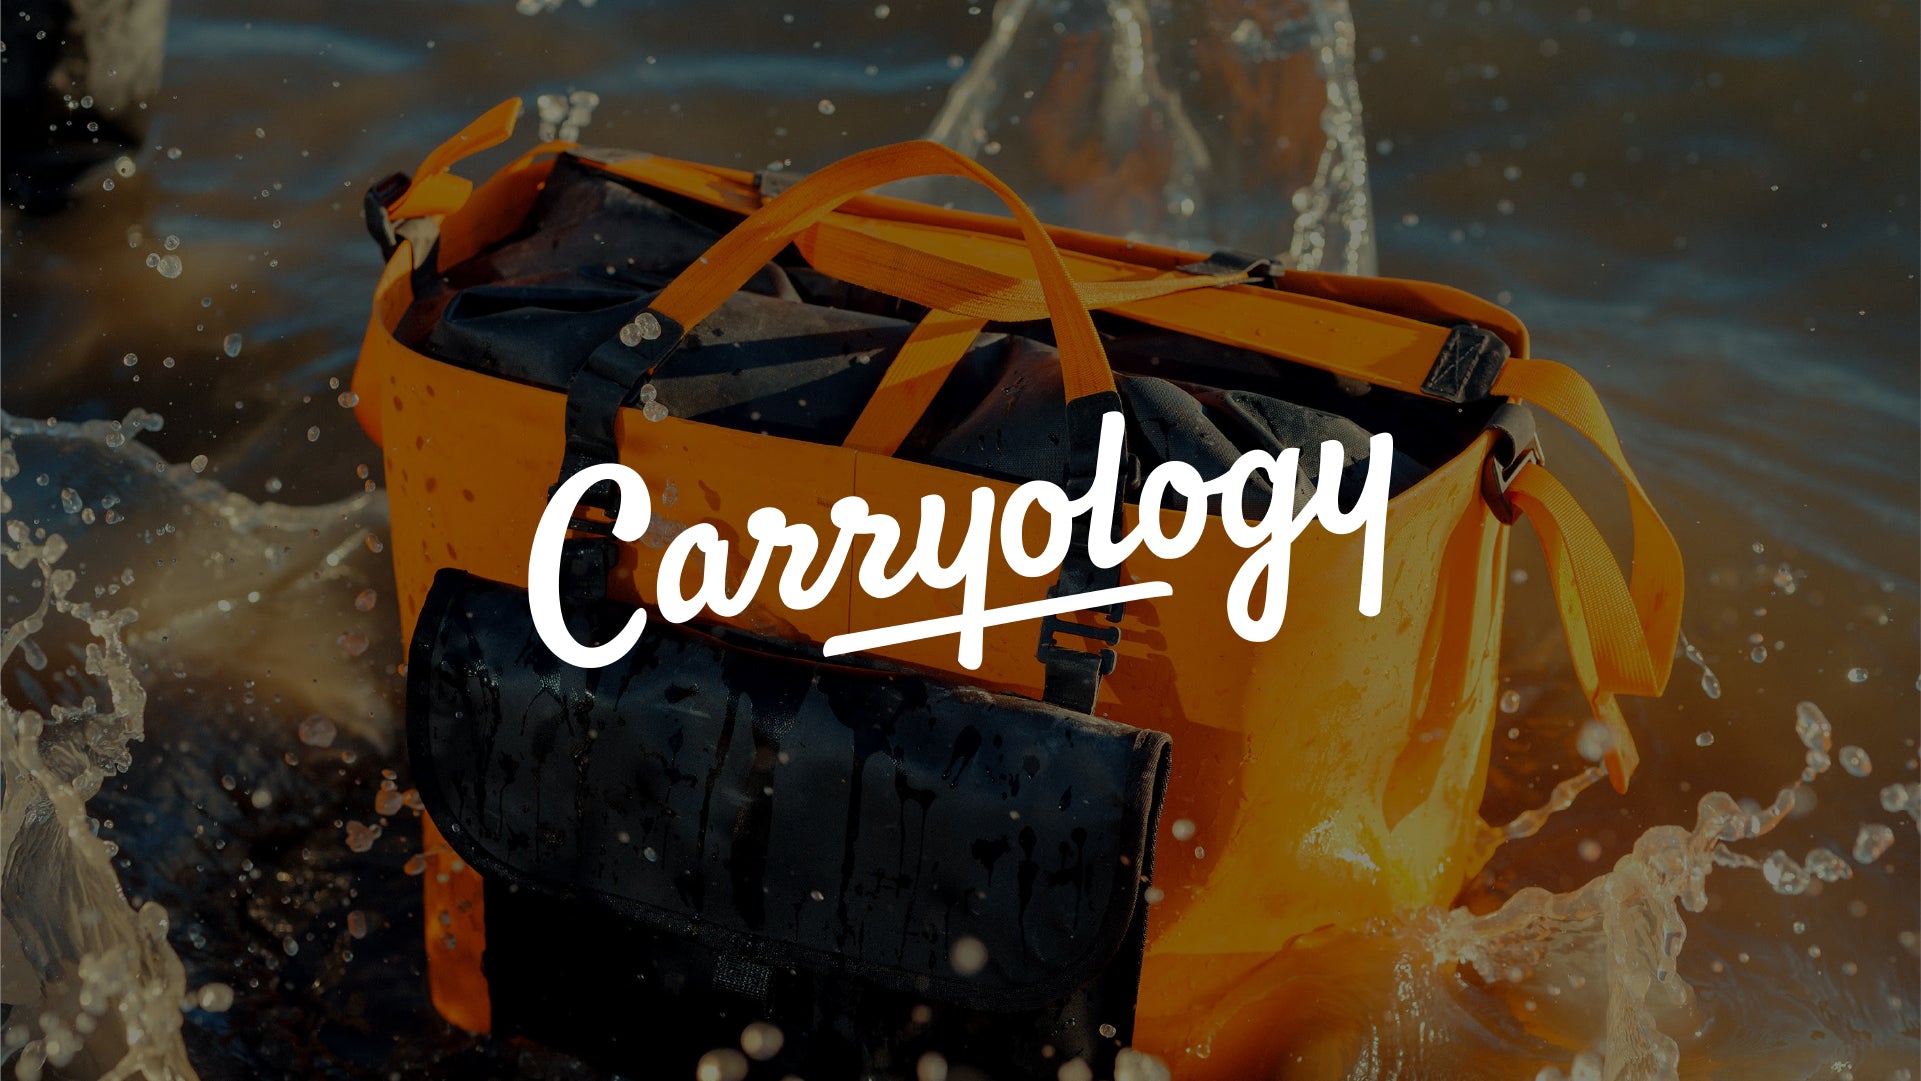 RUX Waterproof Bag Featured in Carryology